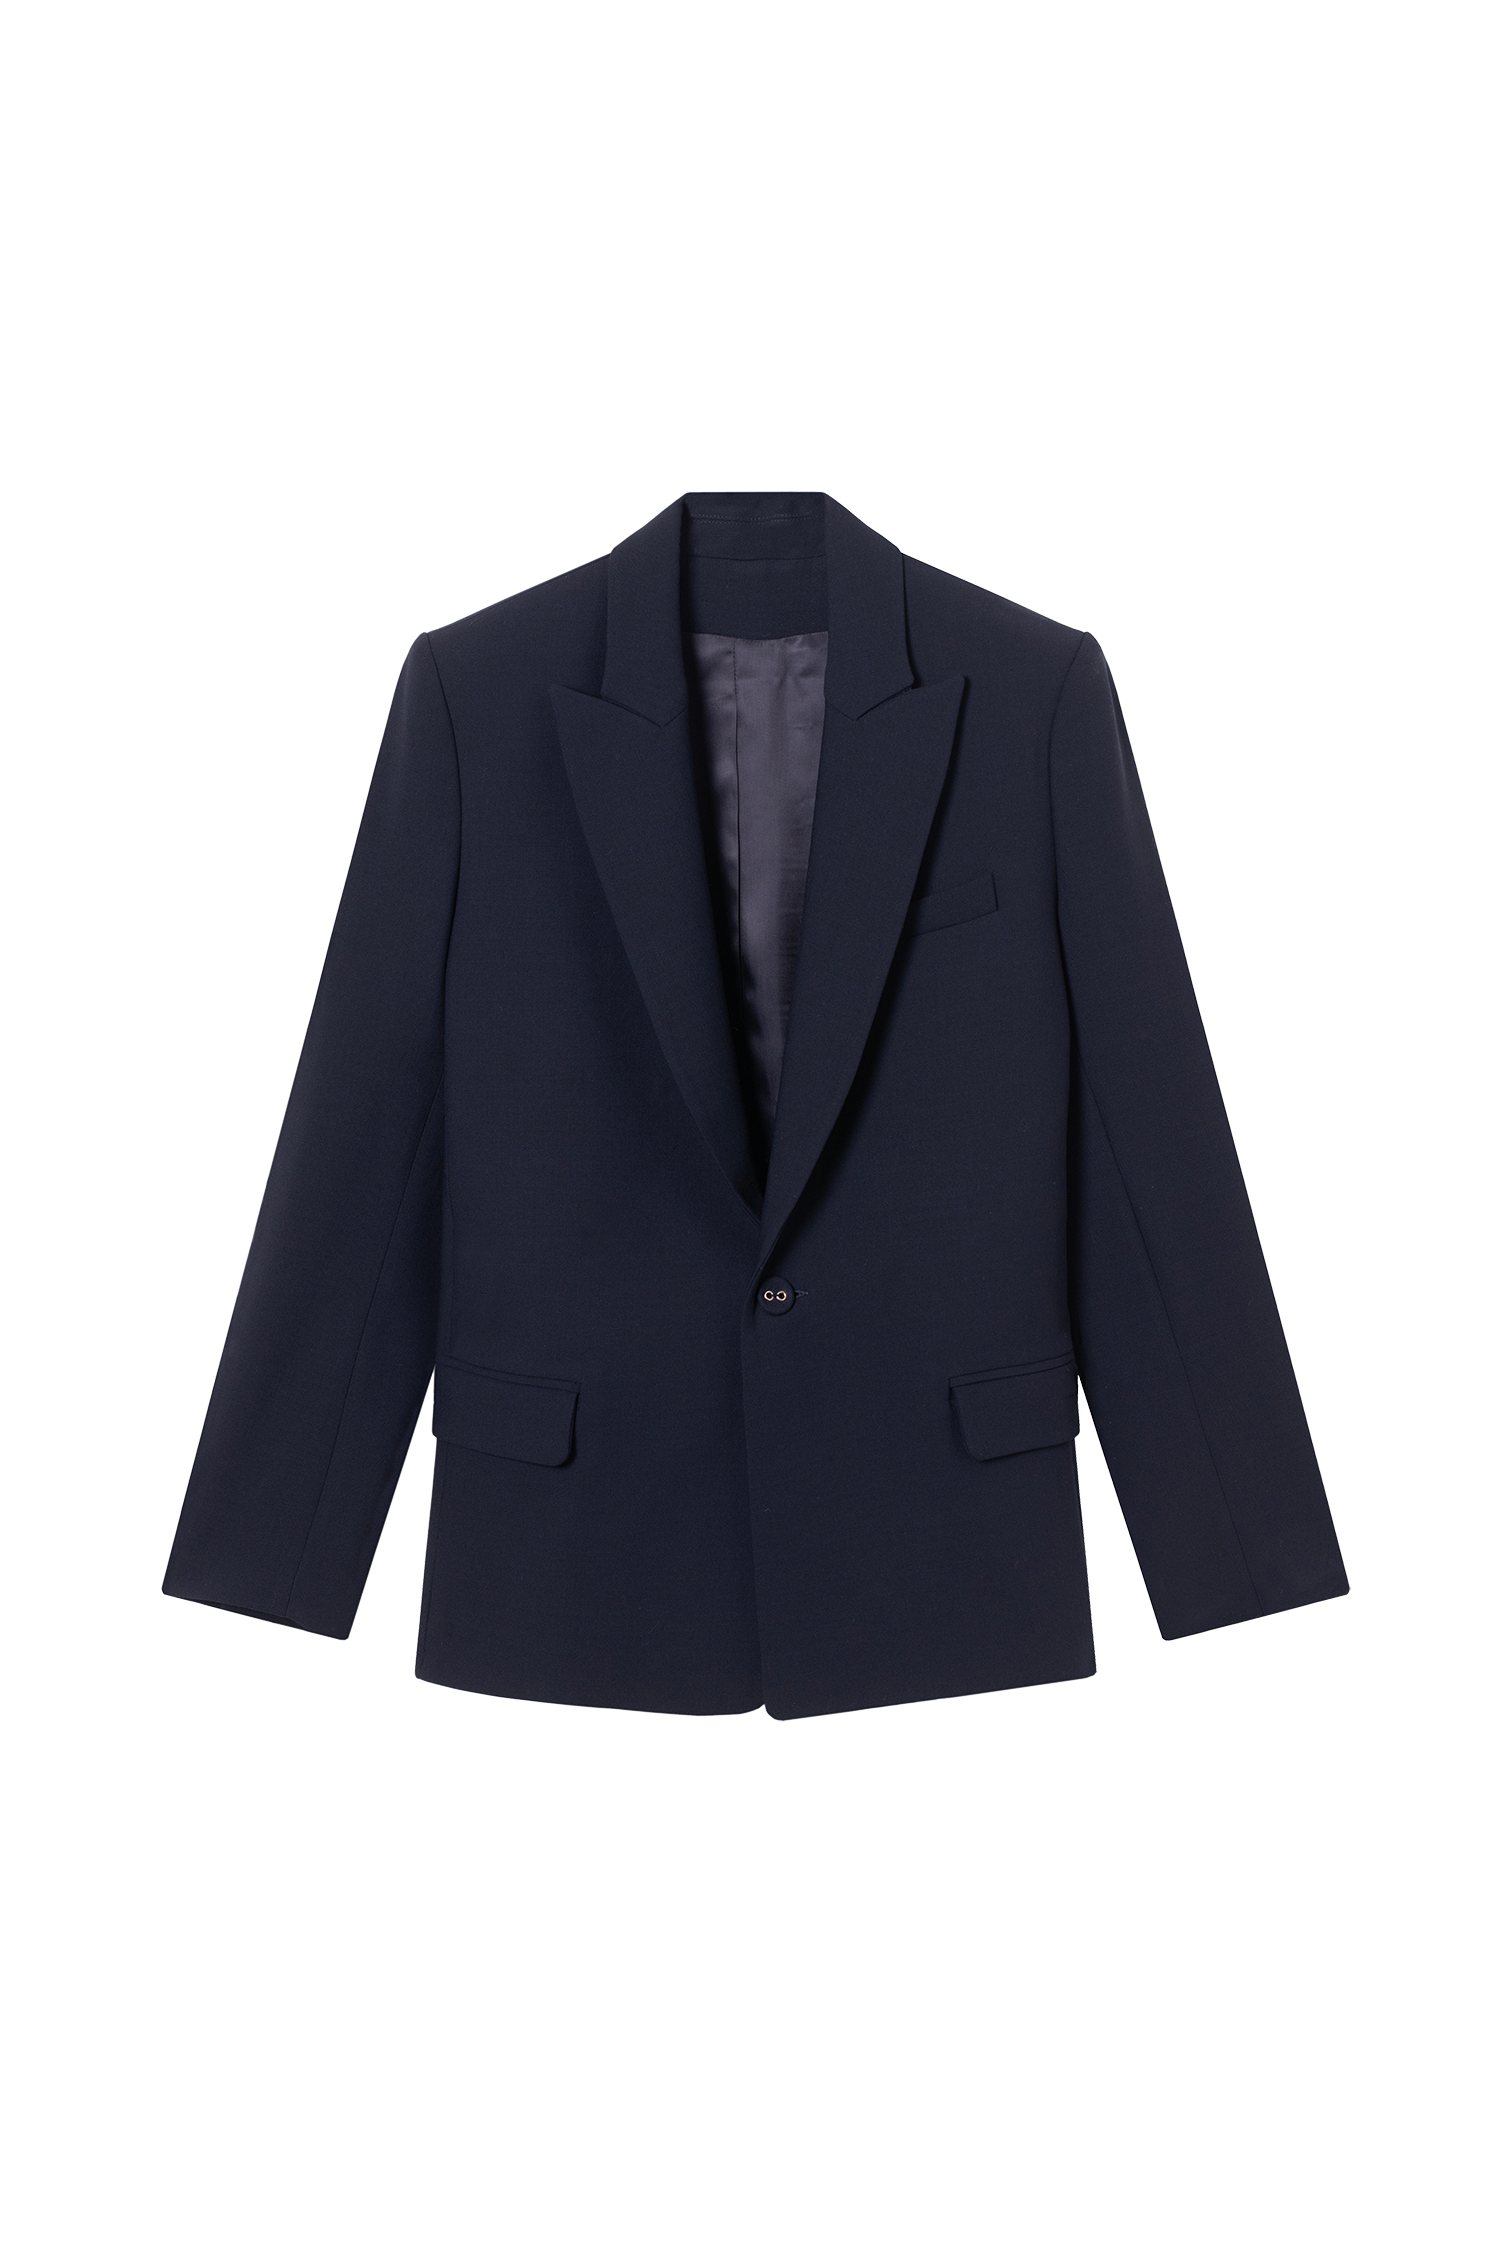 veste blazer gabardine bleu nuit made in France par Facettes Studio